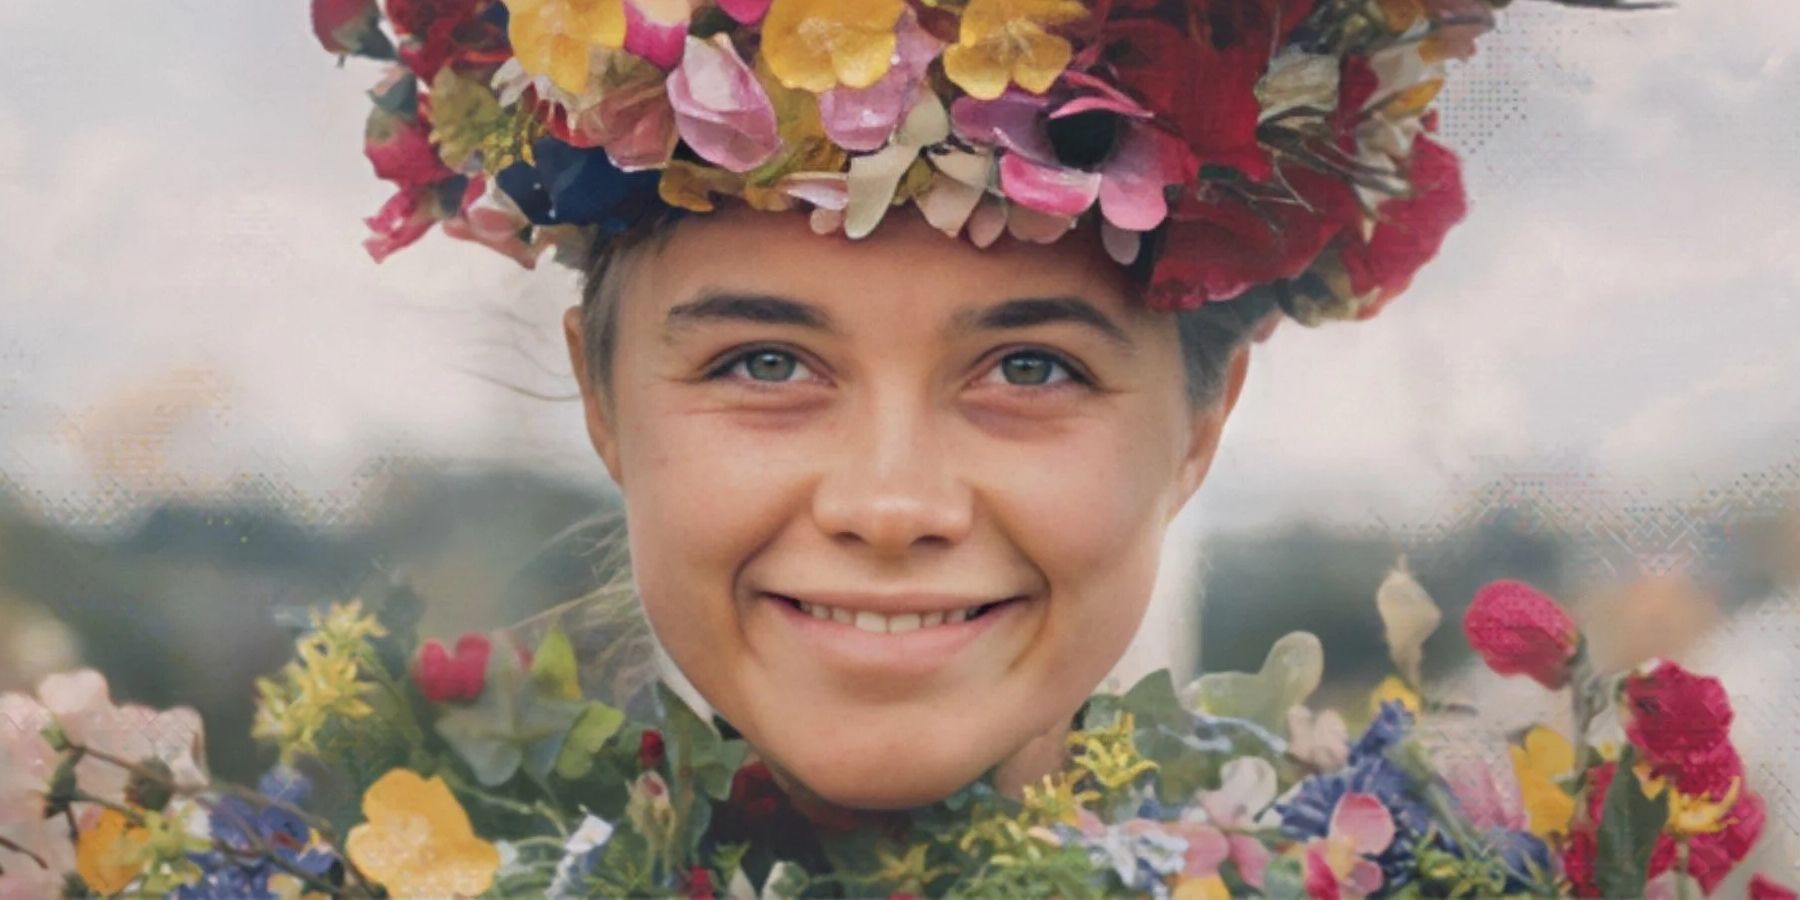 girl dressed in flowers smiling